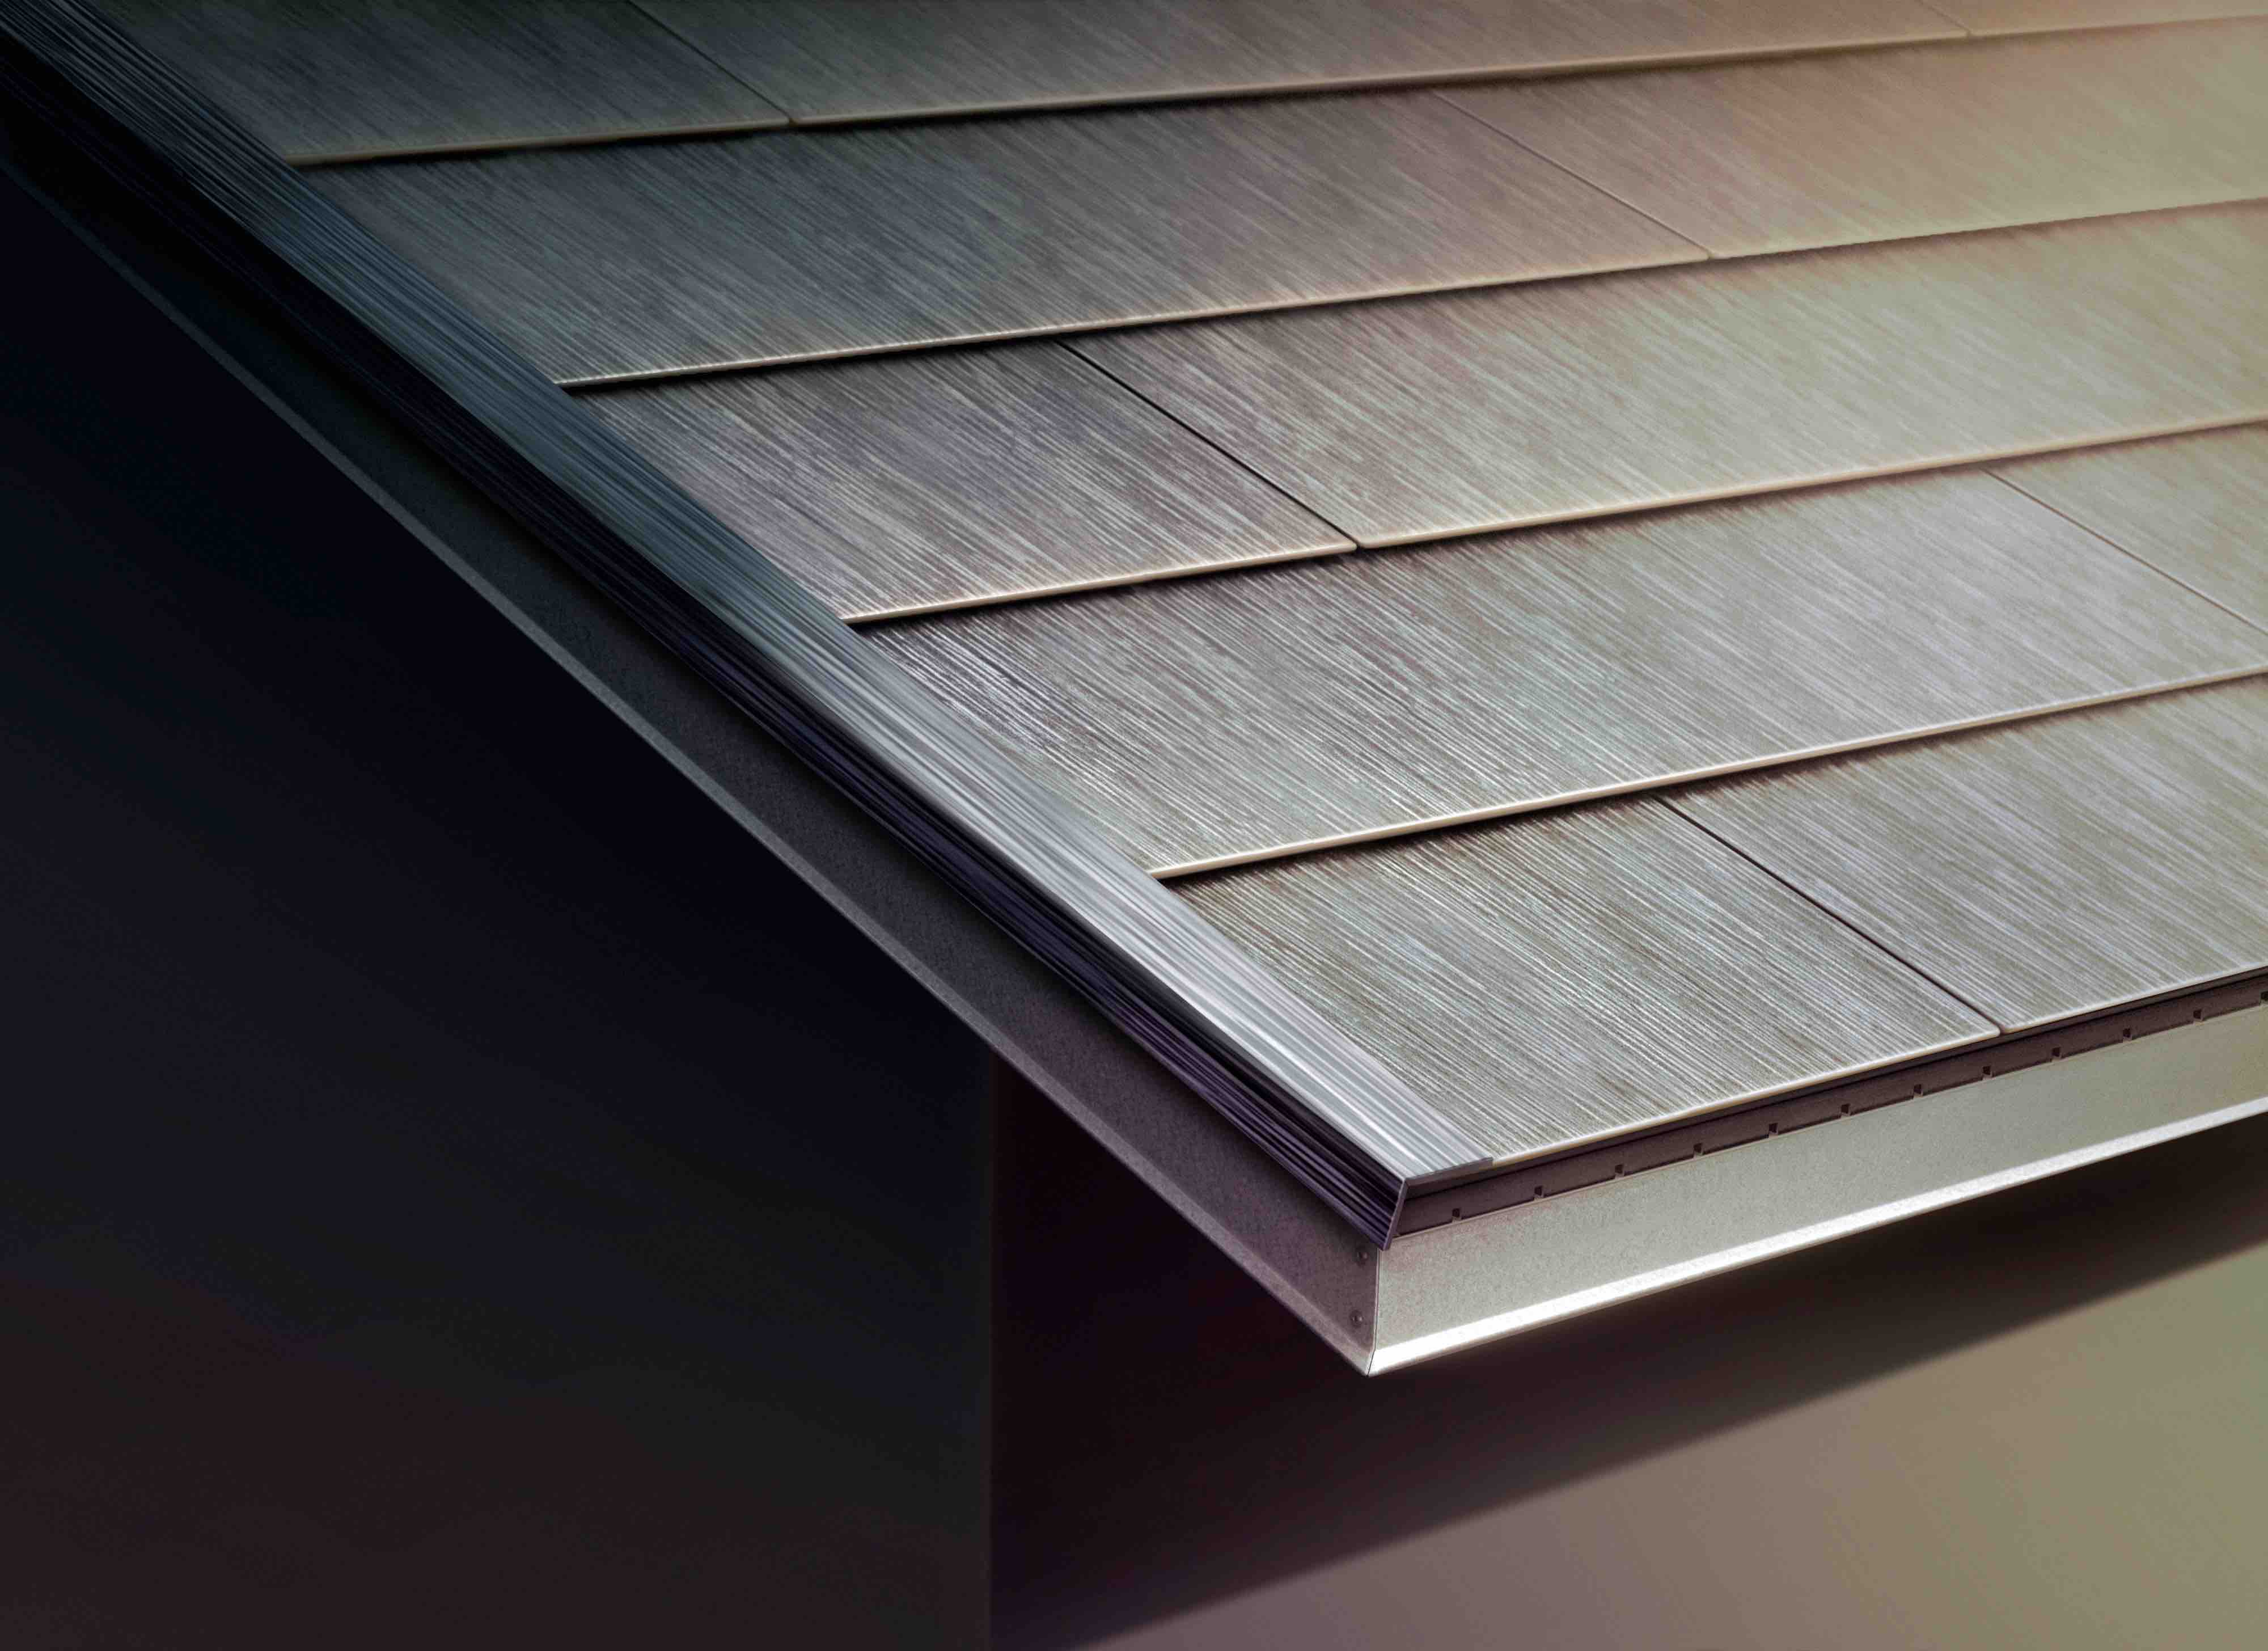 A detail illustration of the Tesla solar roof